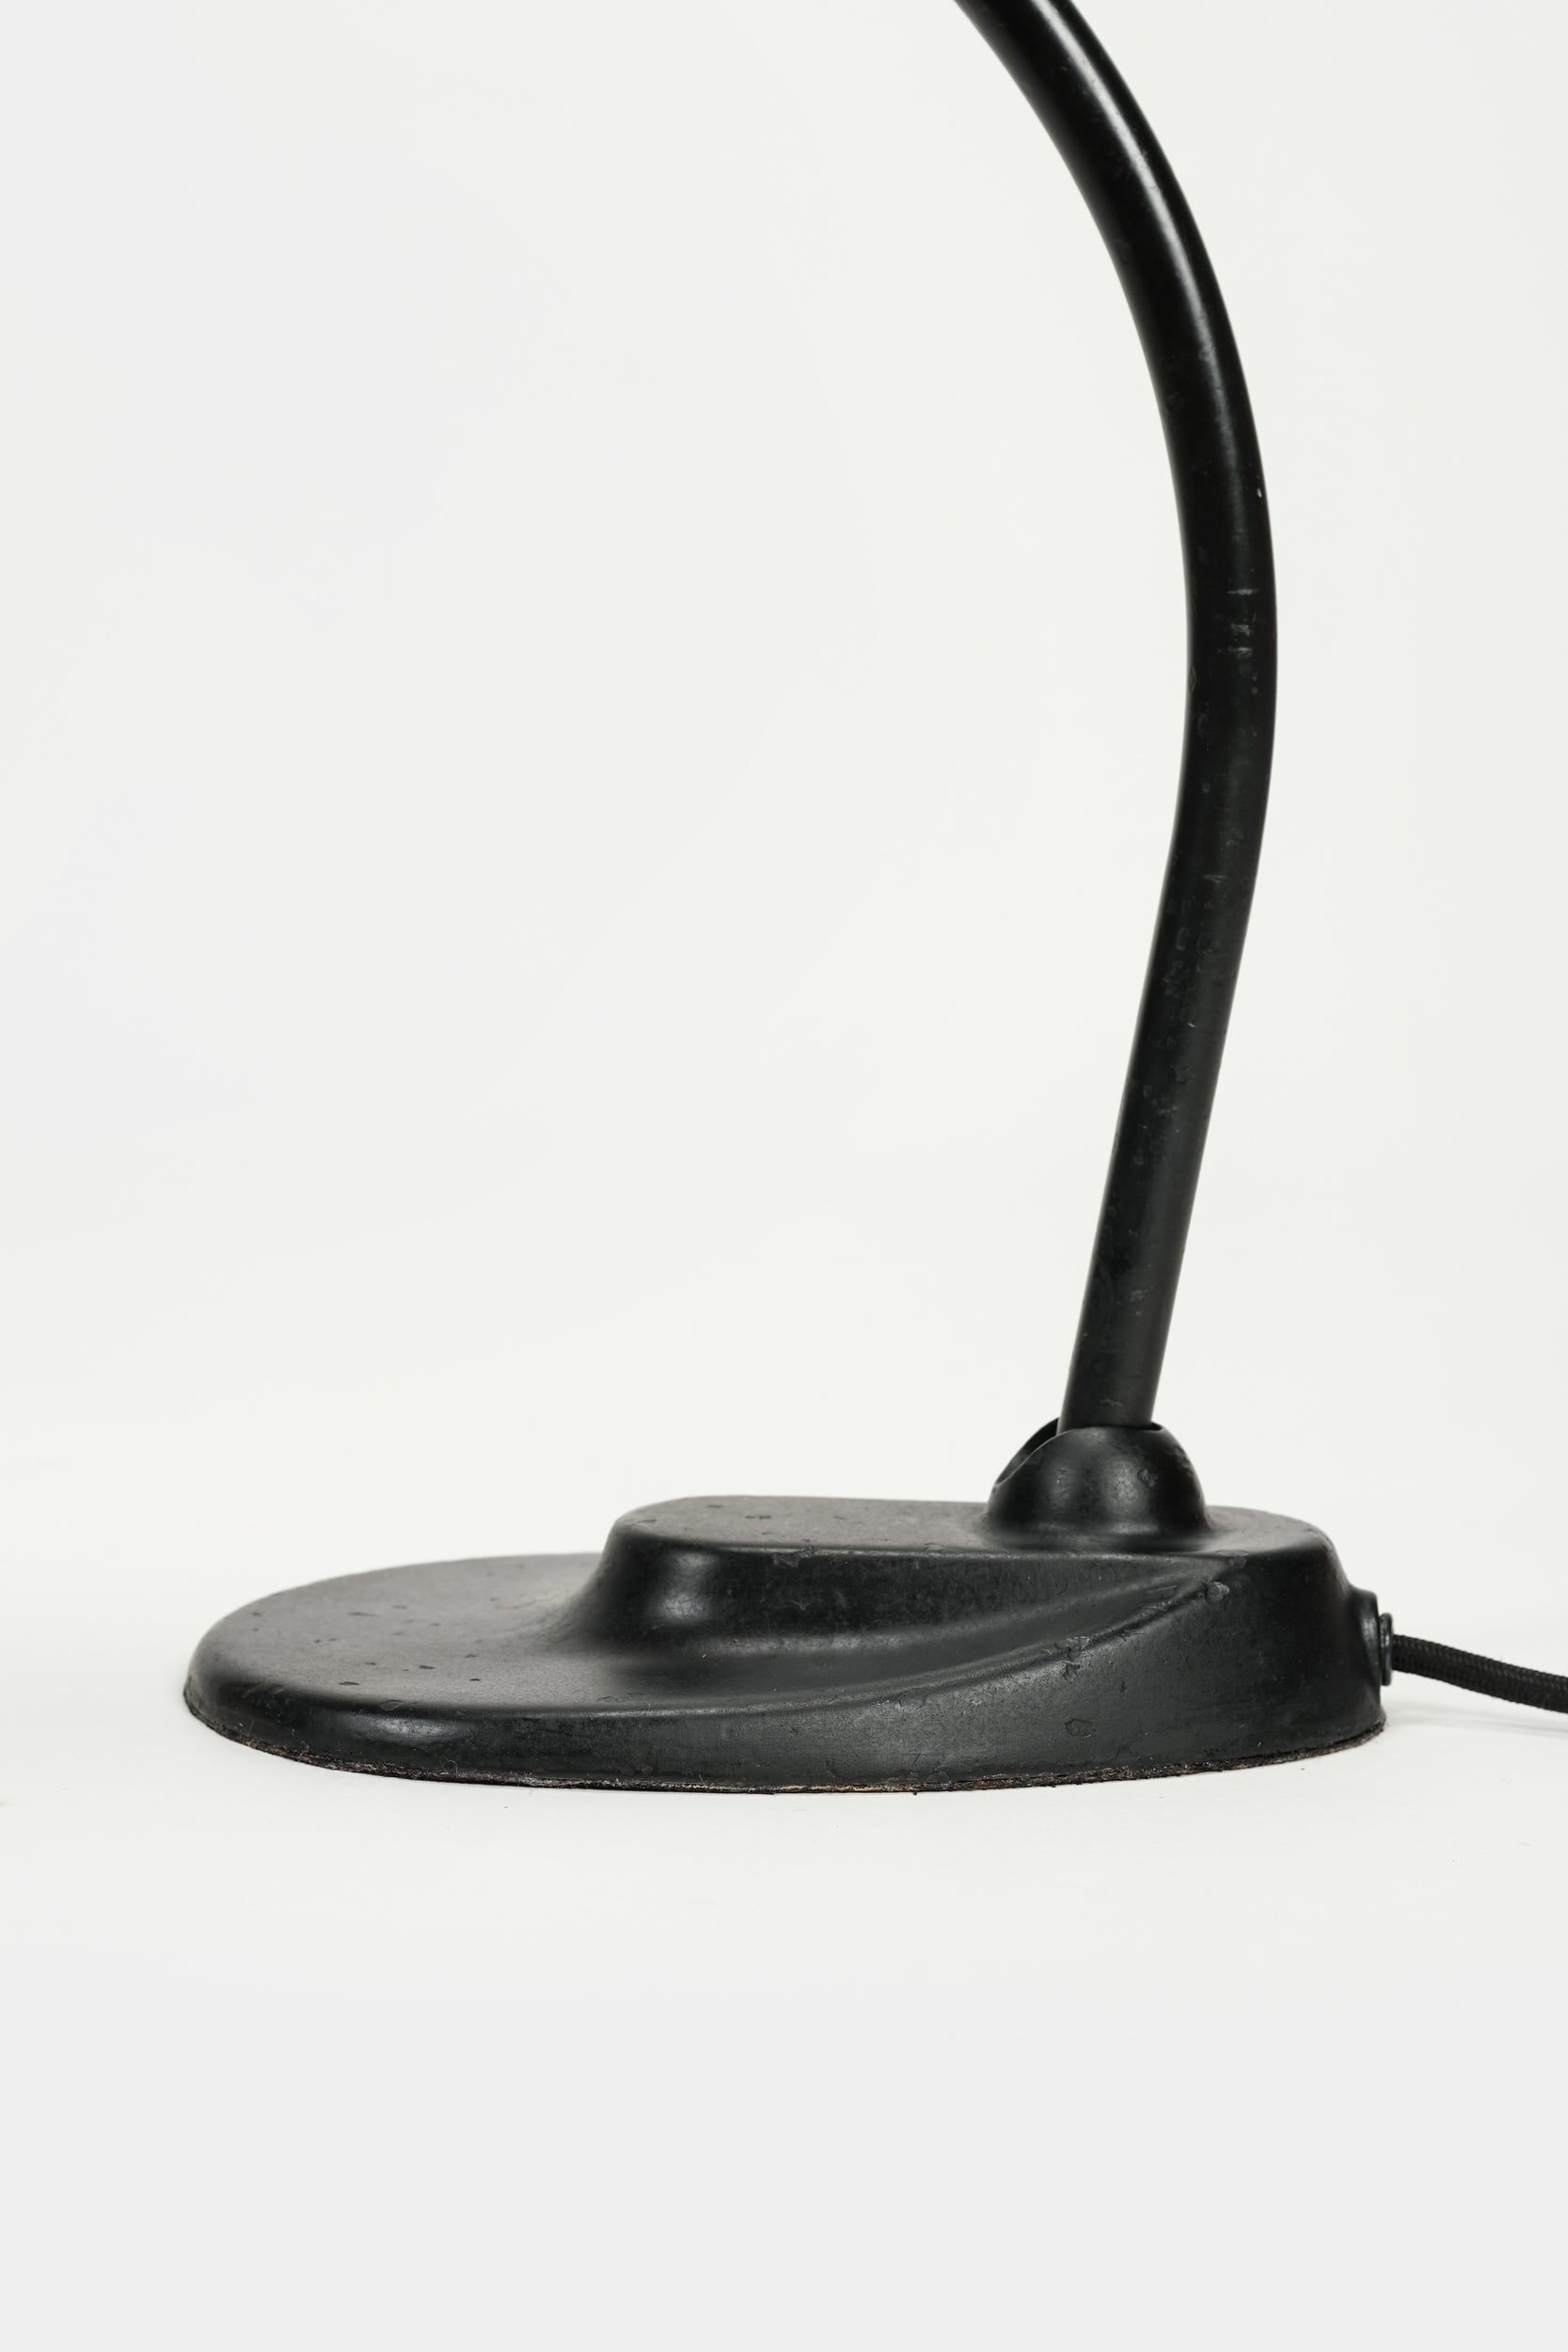 Kandem Table Lamp, Marianne Brandt, 1928